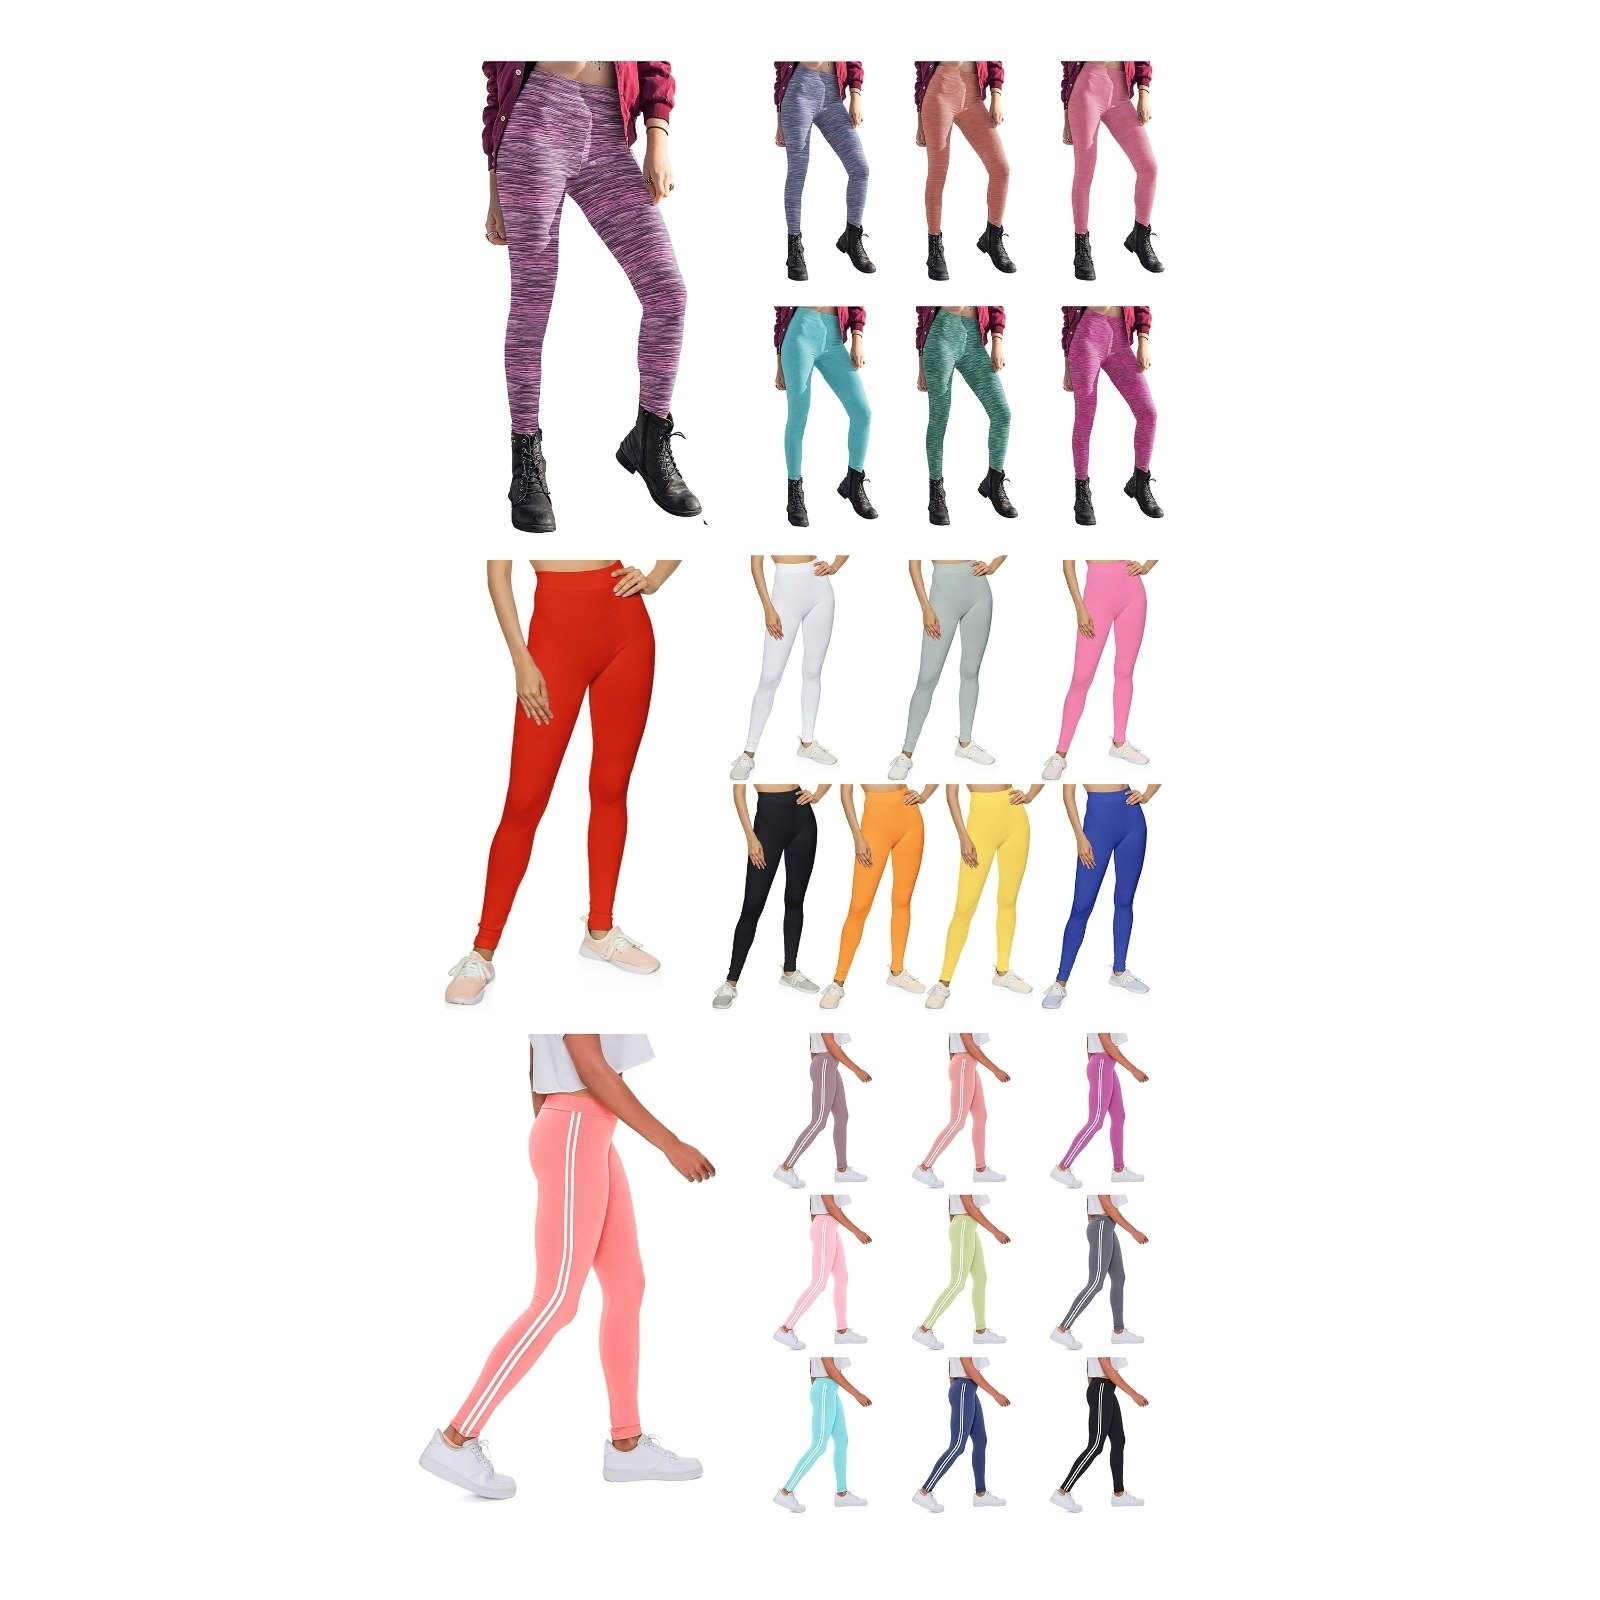 2-Pack: Women's Ultra-Soft Yoga Workout Leggings - SpaceDye, Large/X-Large